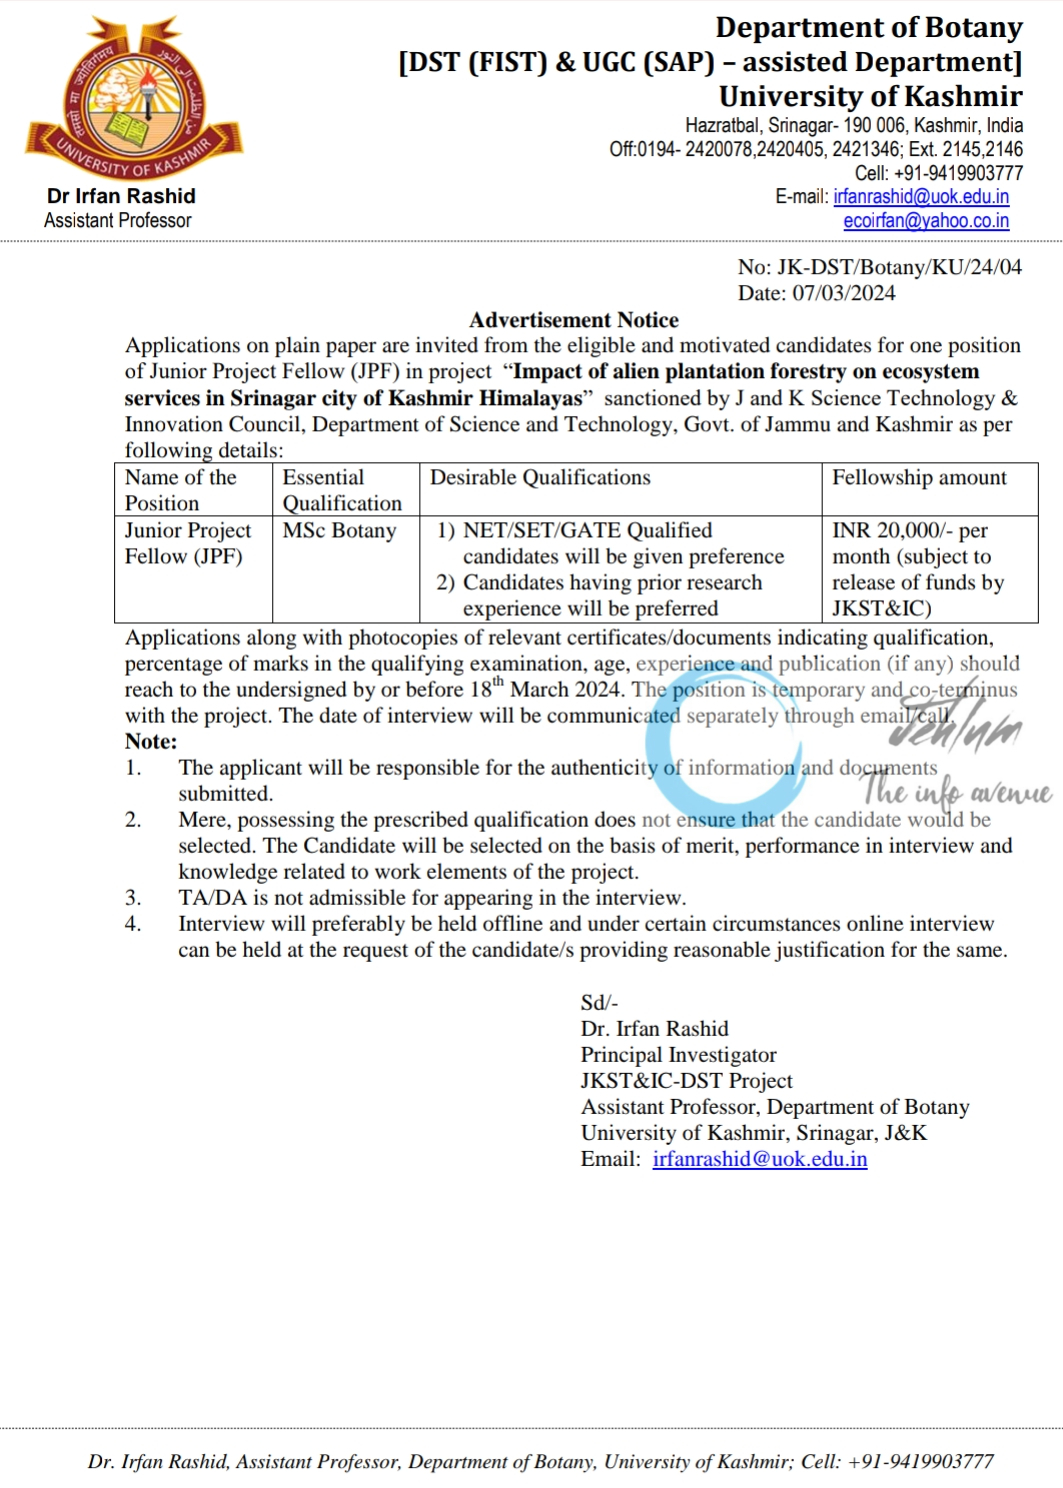 University of Kashmir Deptt of Botany JPF Advertisement Notice 2024